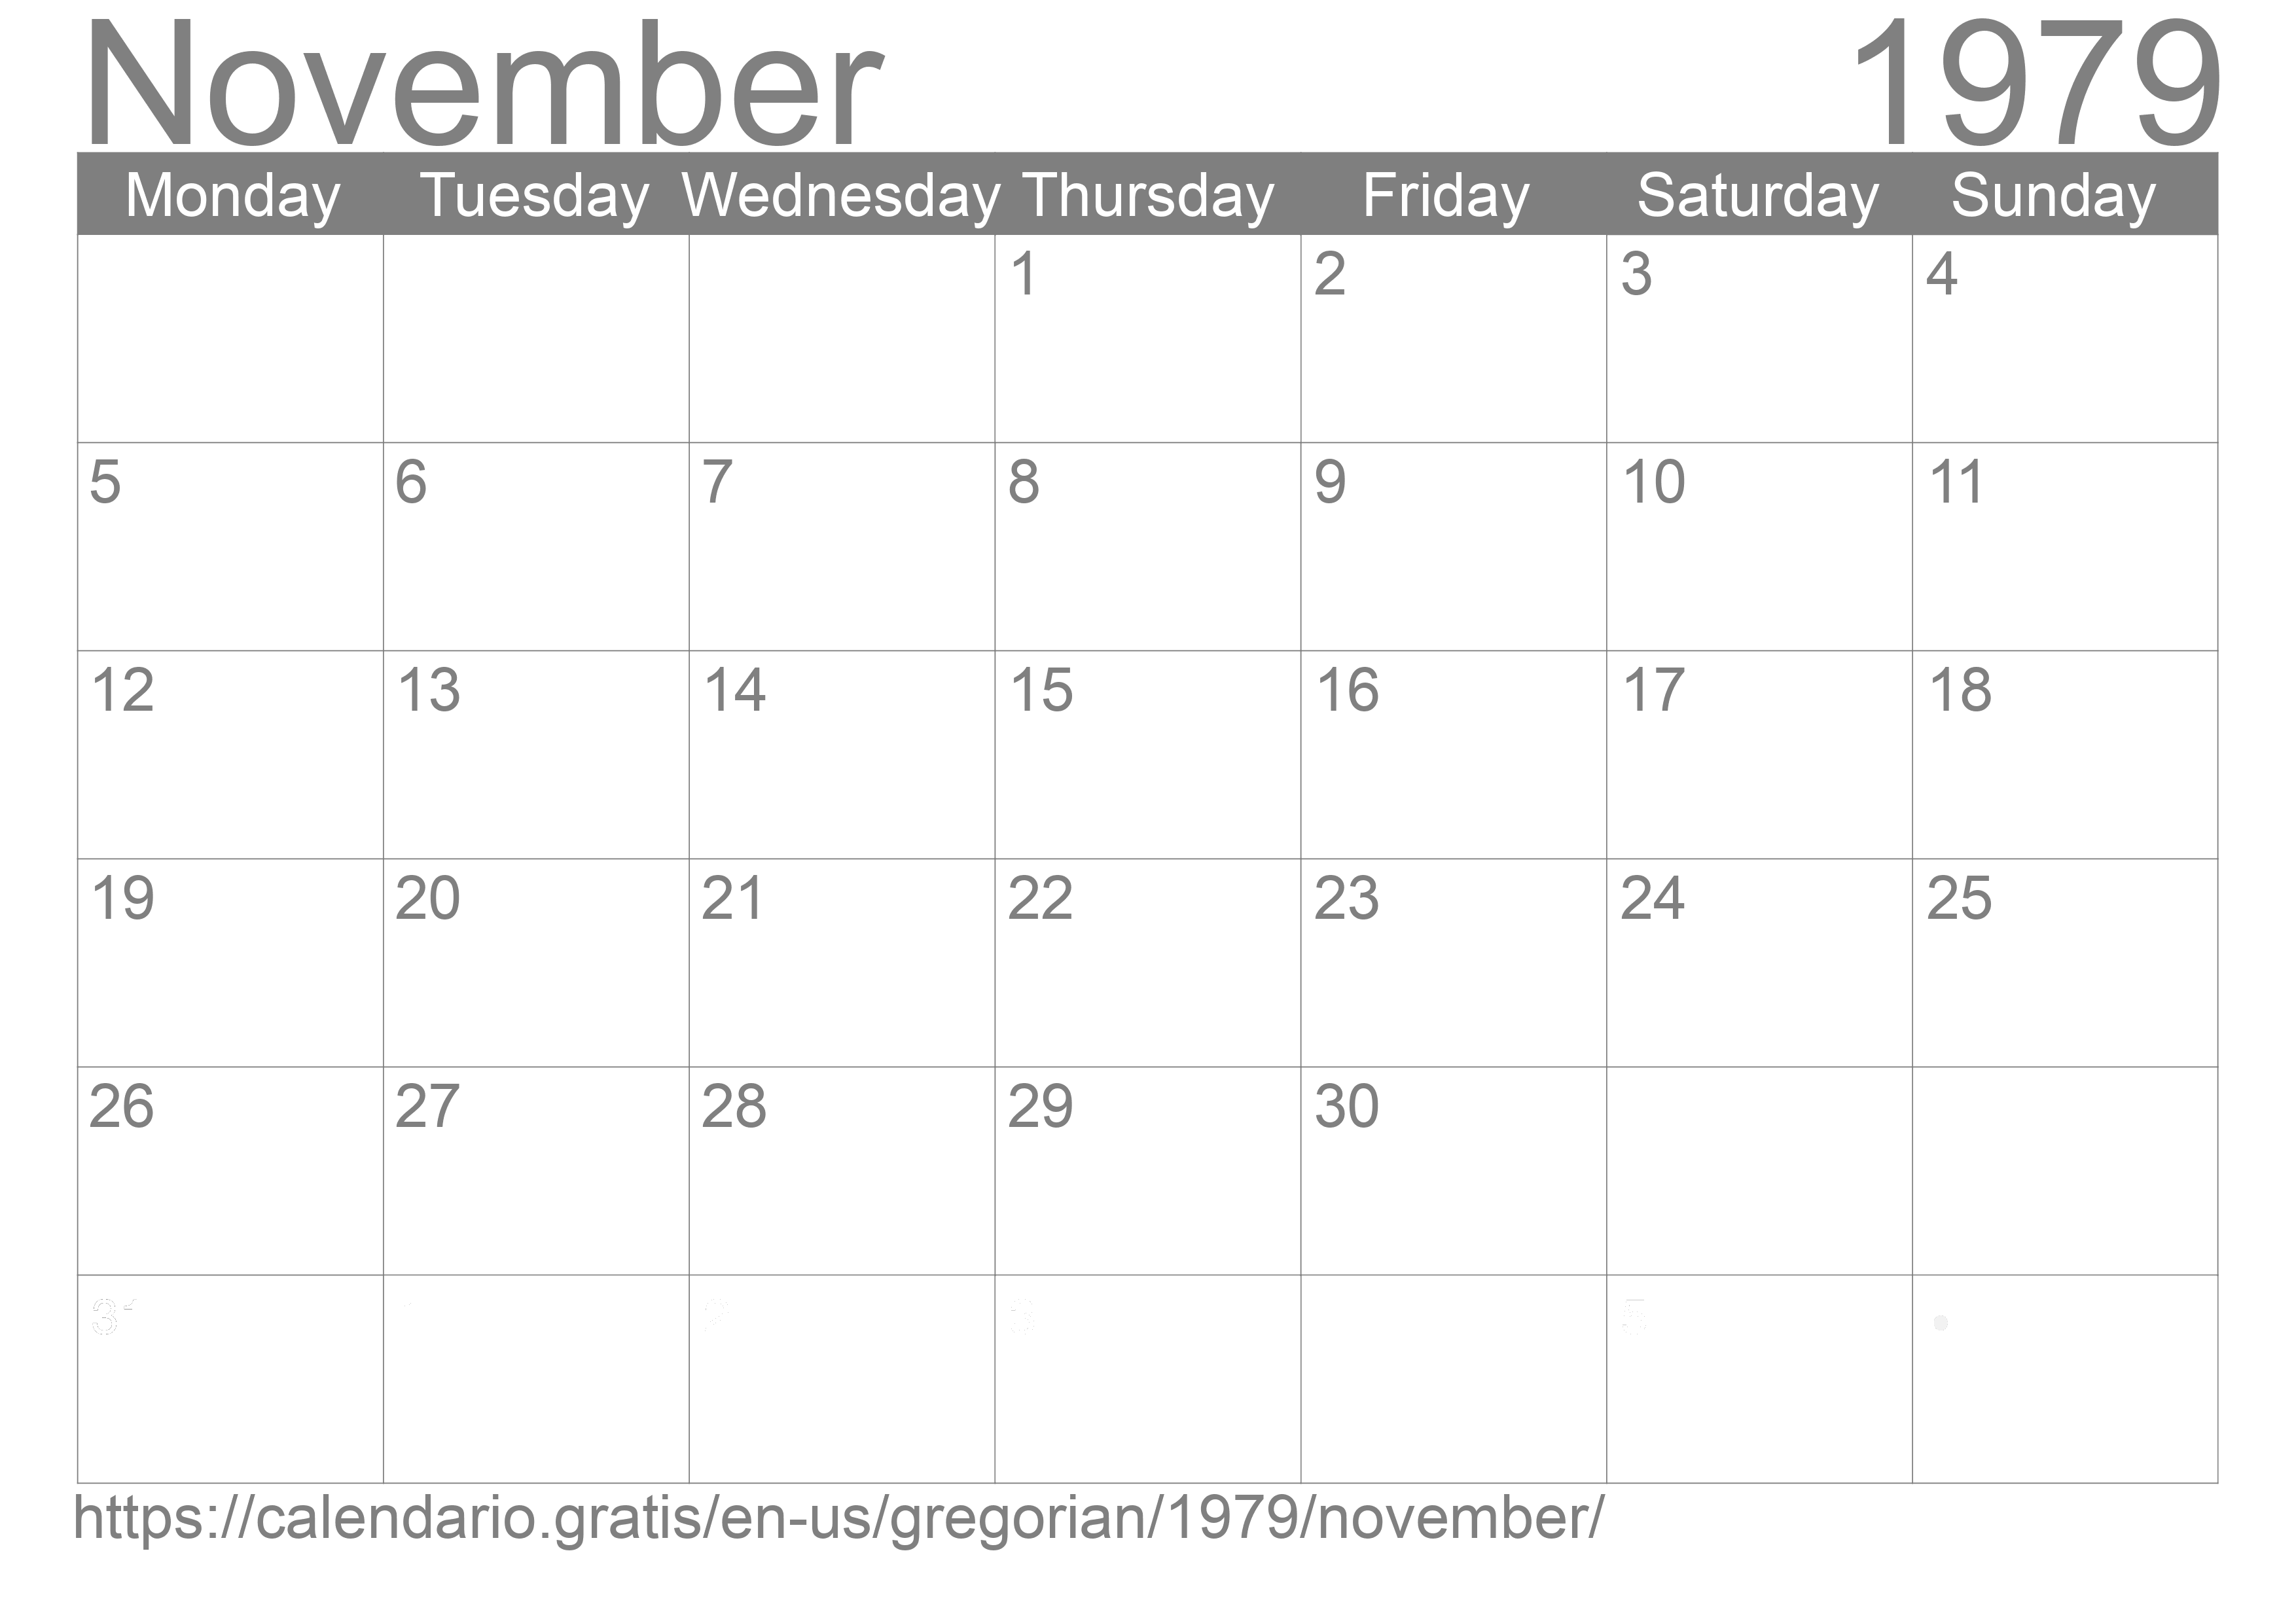 Calendar November 1979 to print